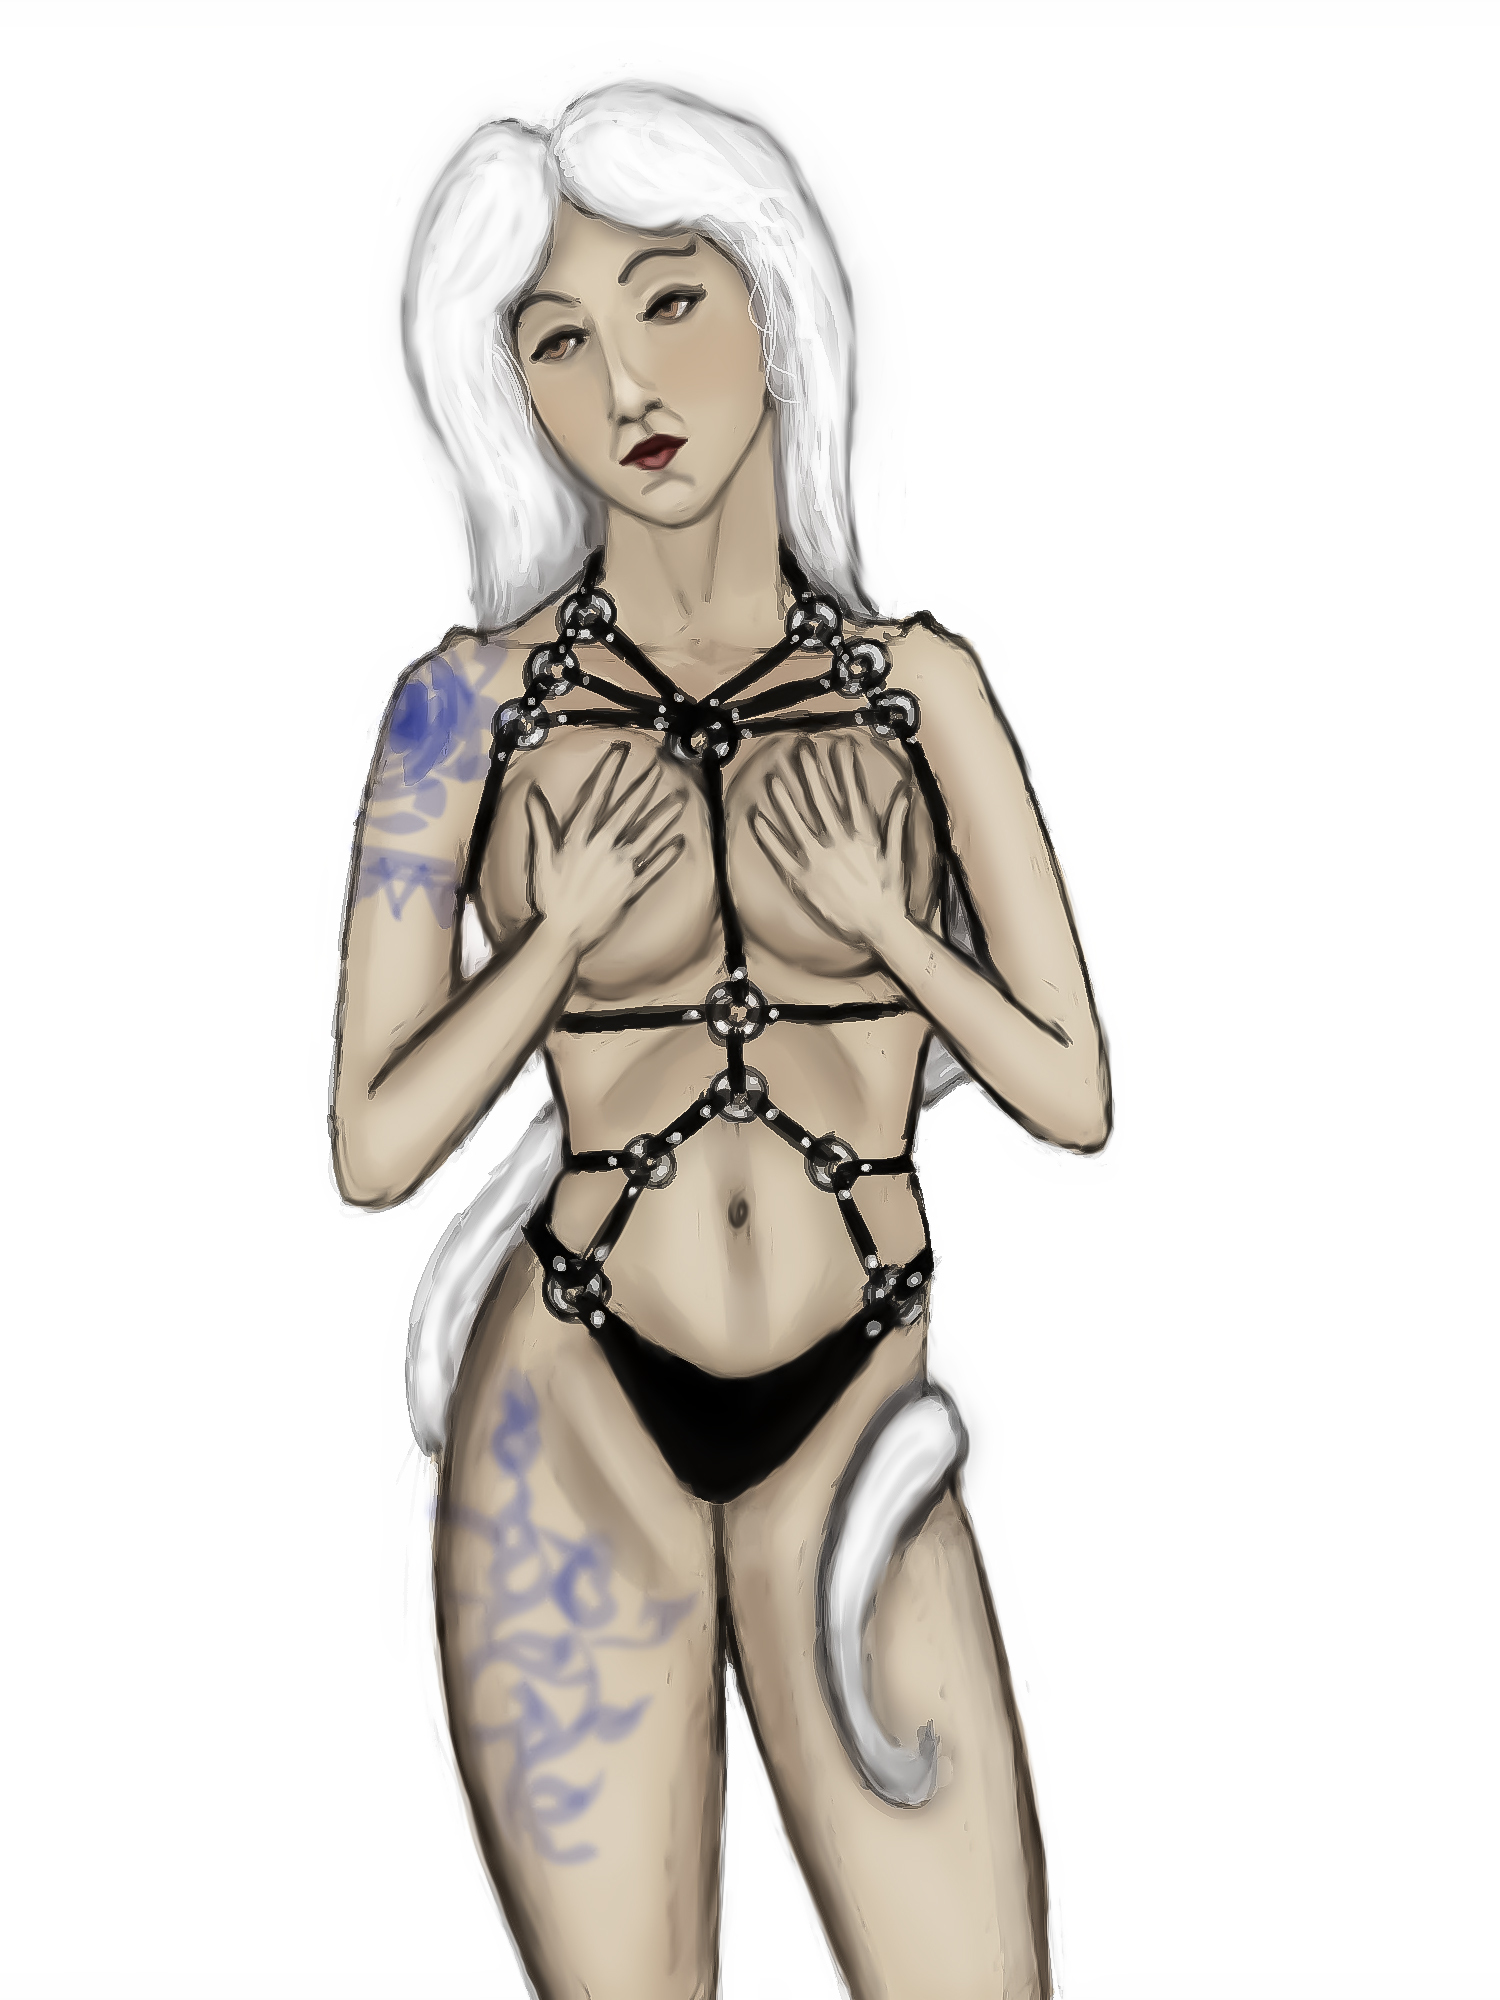 Vulgar Venus - NSFW, My, Venus, Boobs, Girl with tattoo, Harness, Sketch, Customers, Hips